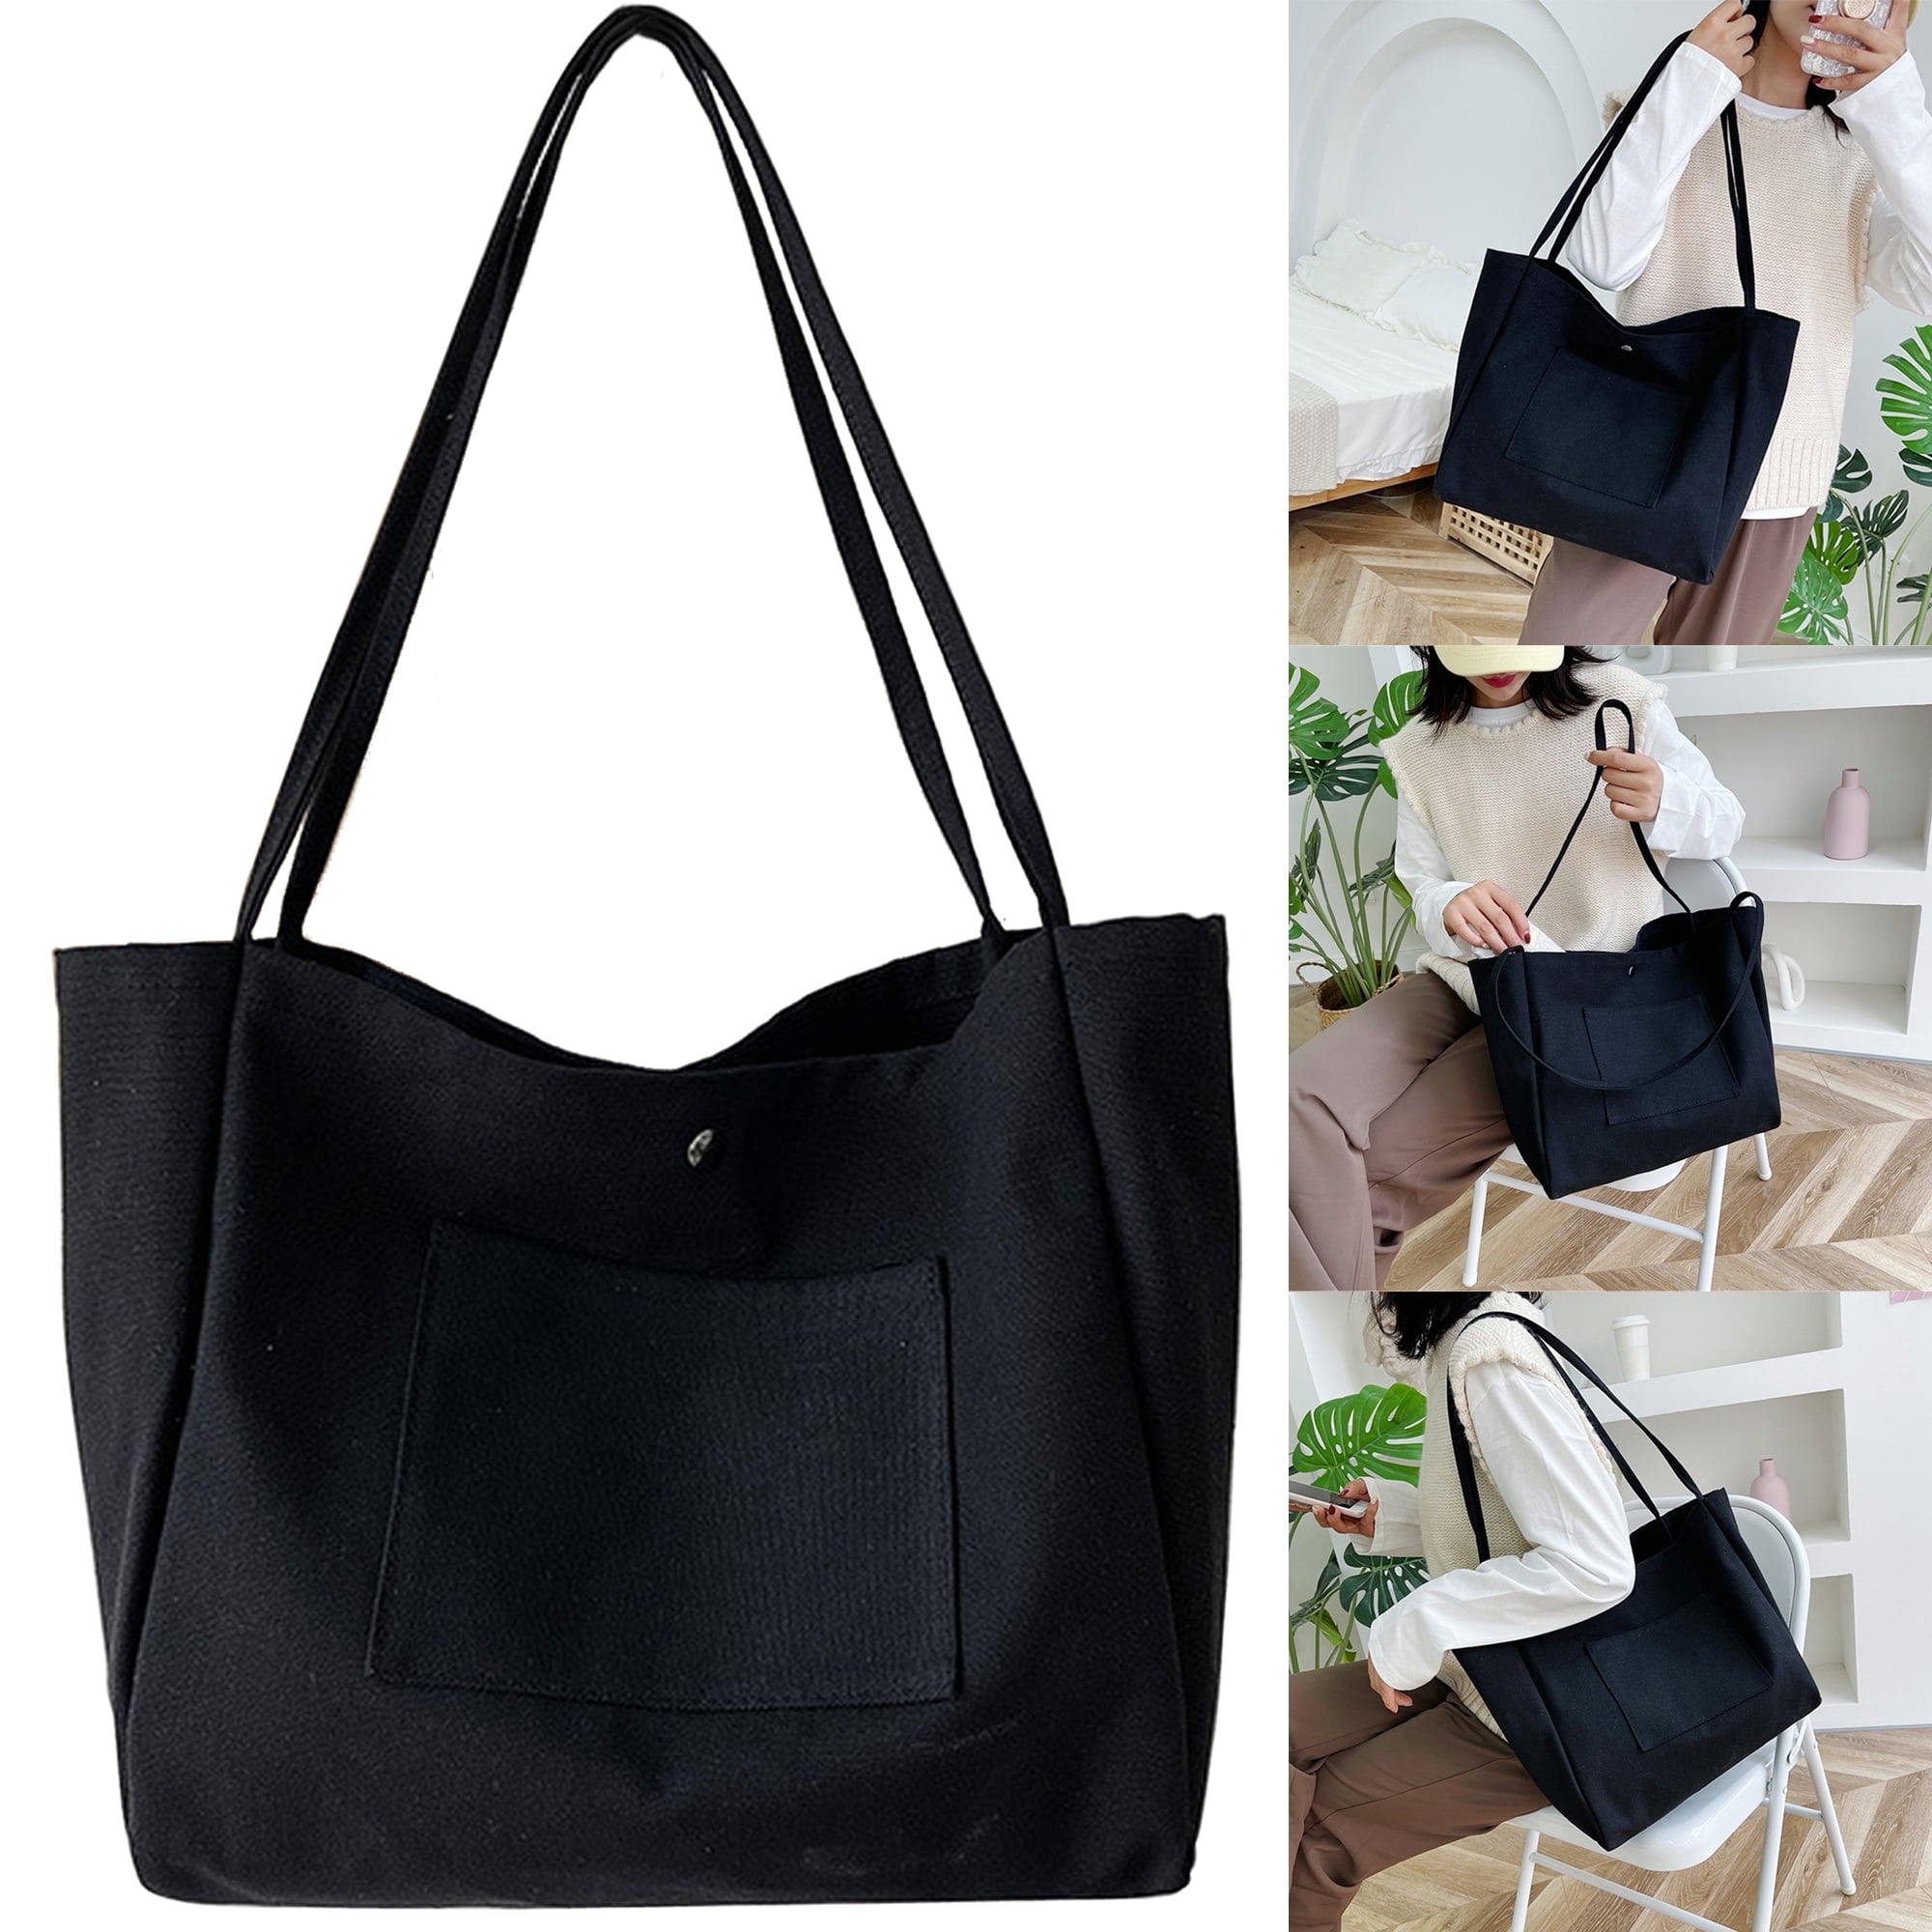 Fashion Extra Large Capacity Lightweight Canvas Bag Shoulder Bag Shopping  Handbags Bag for Women Ladies School Work College Travel, Black